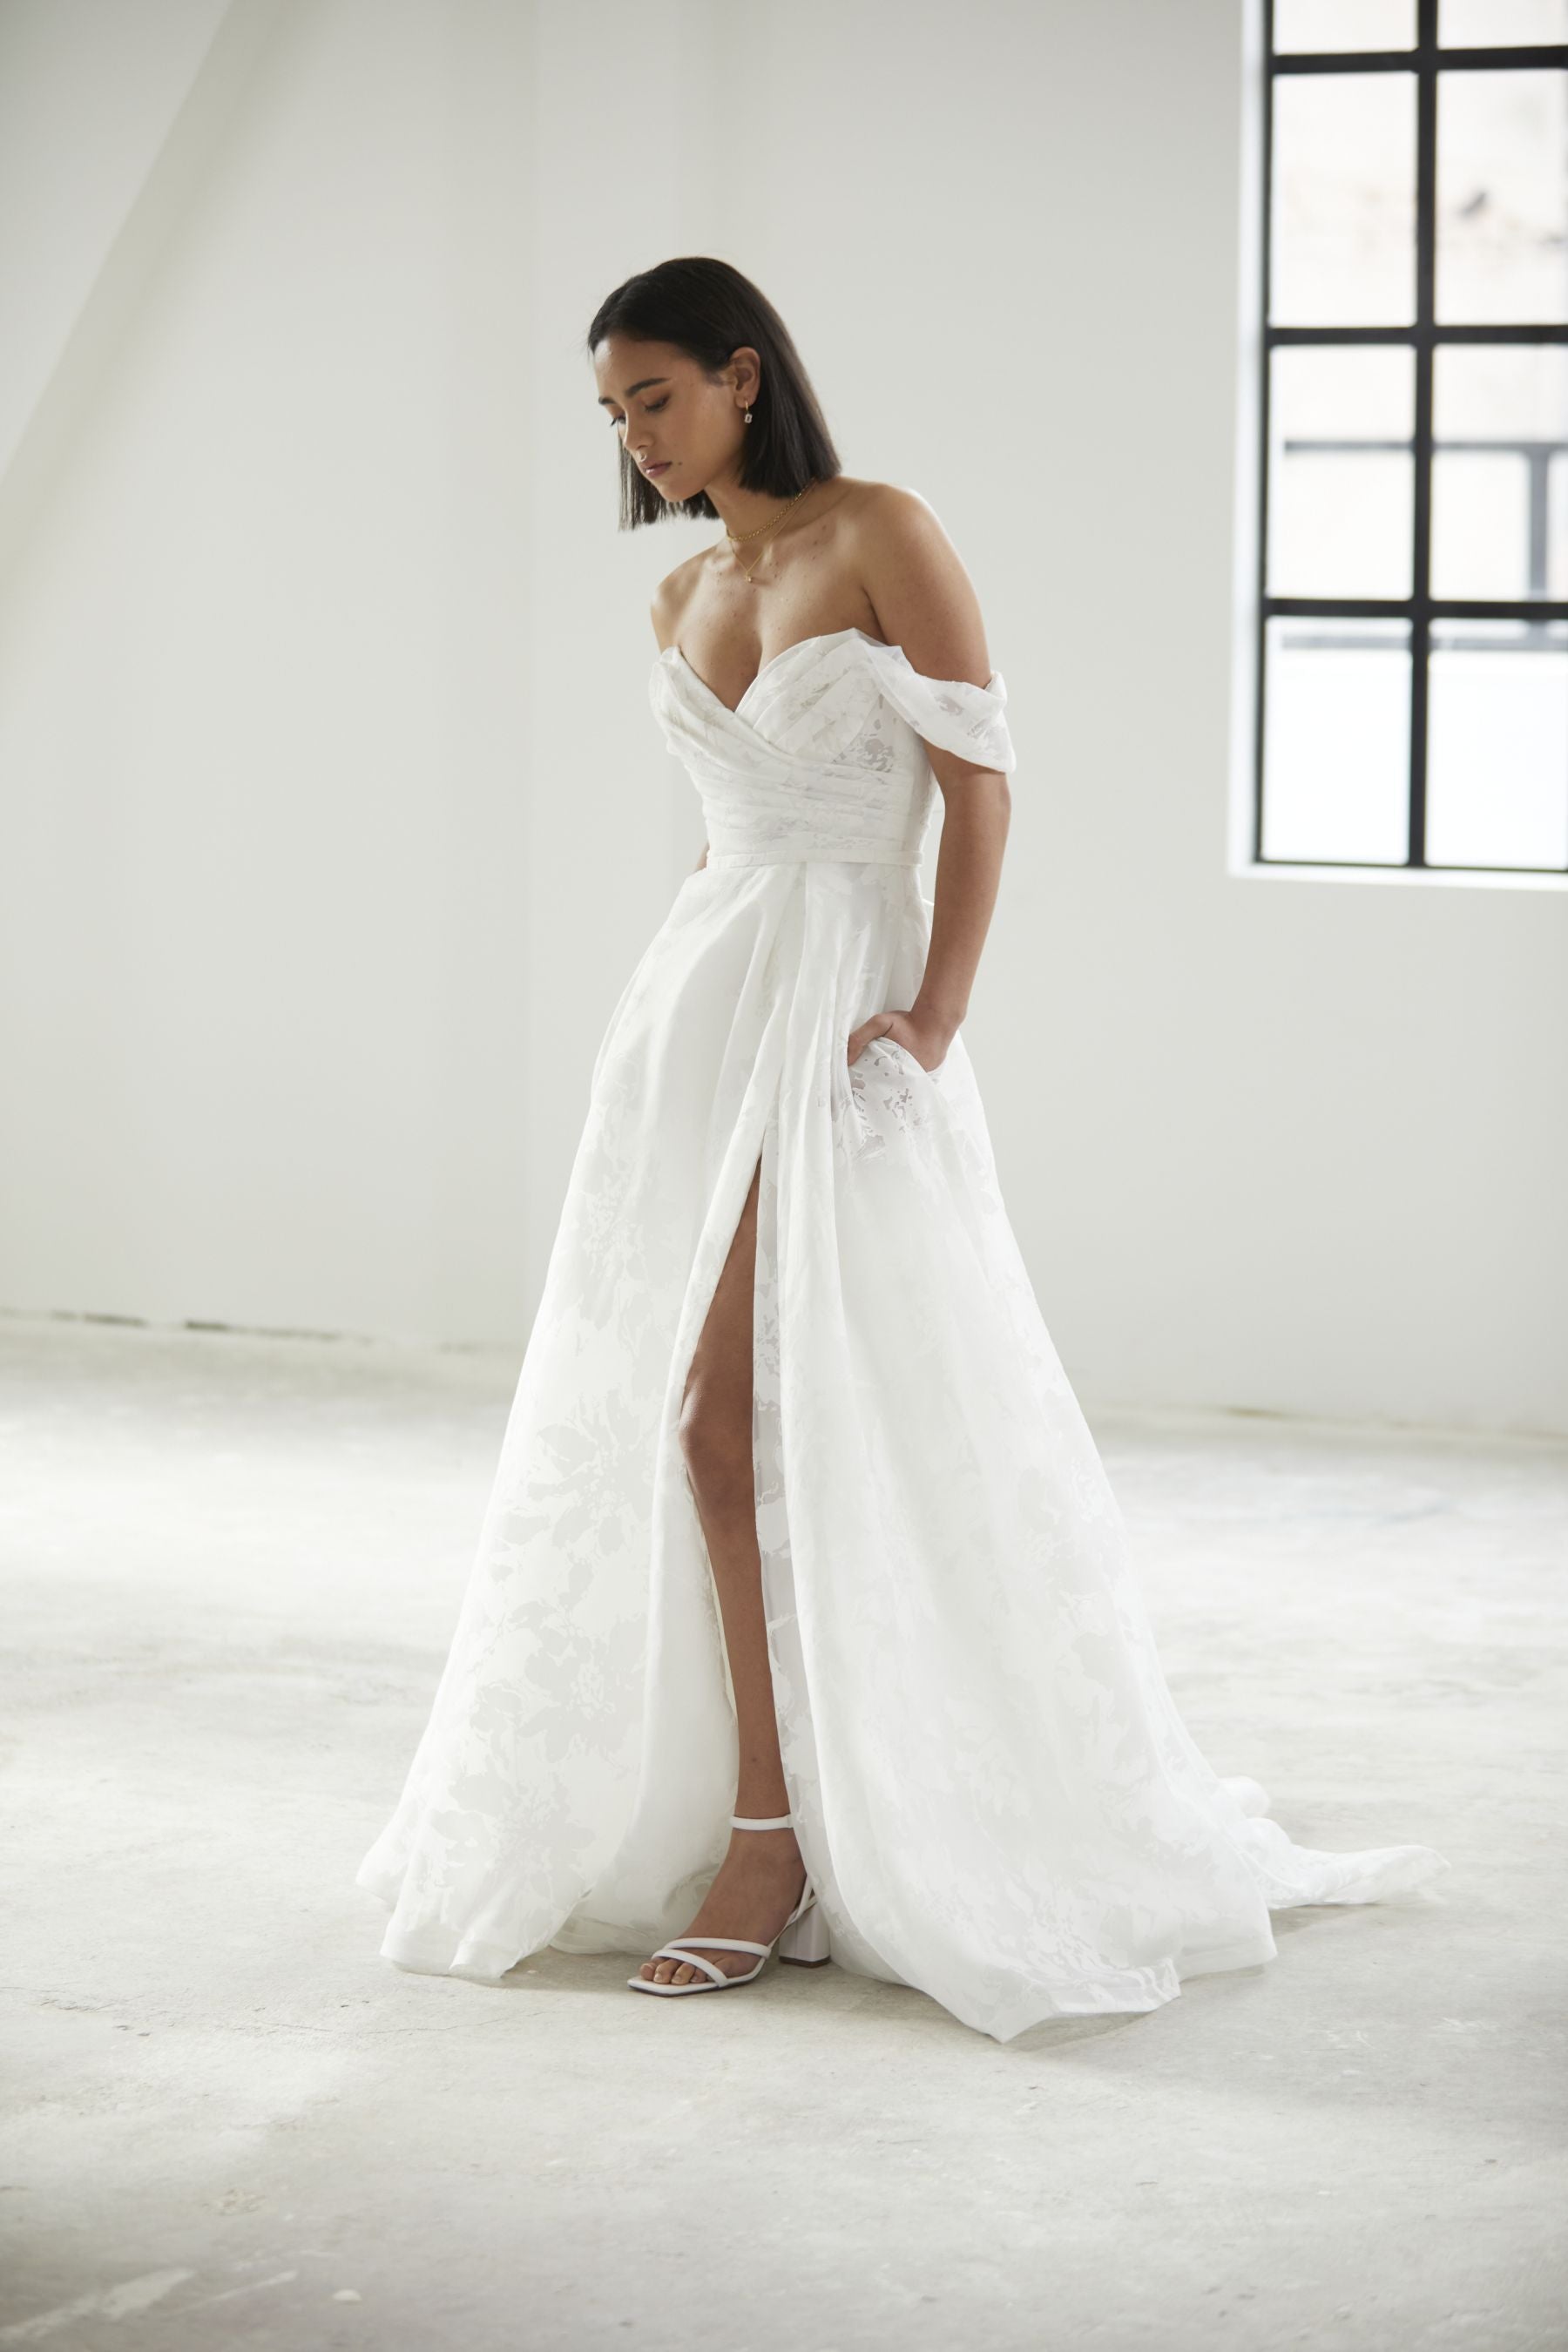 Helix wedding gown